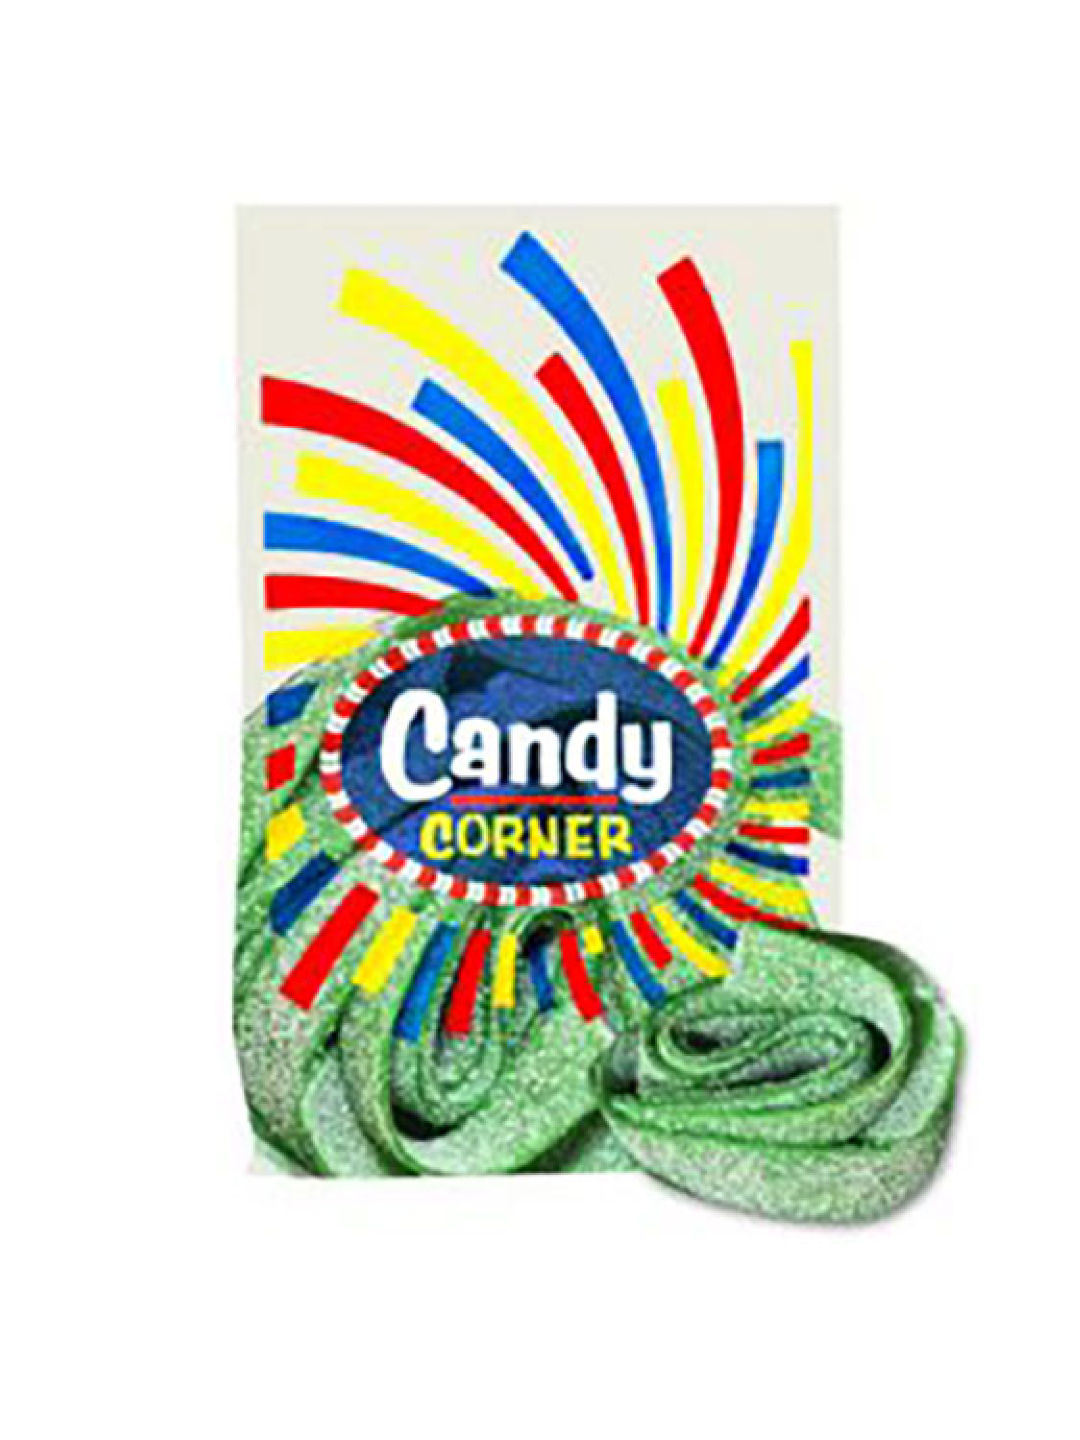 Fini Candy Corner Apple Sour Belts (300g)